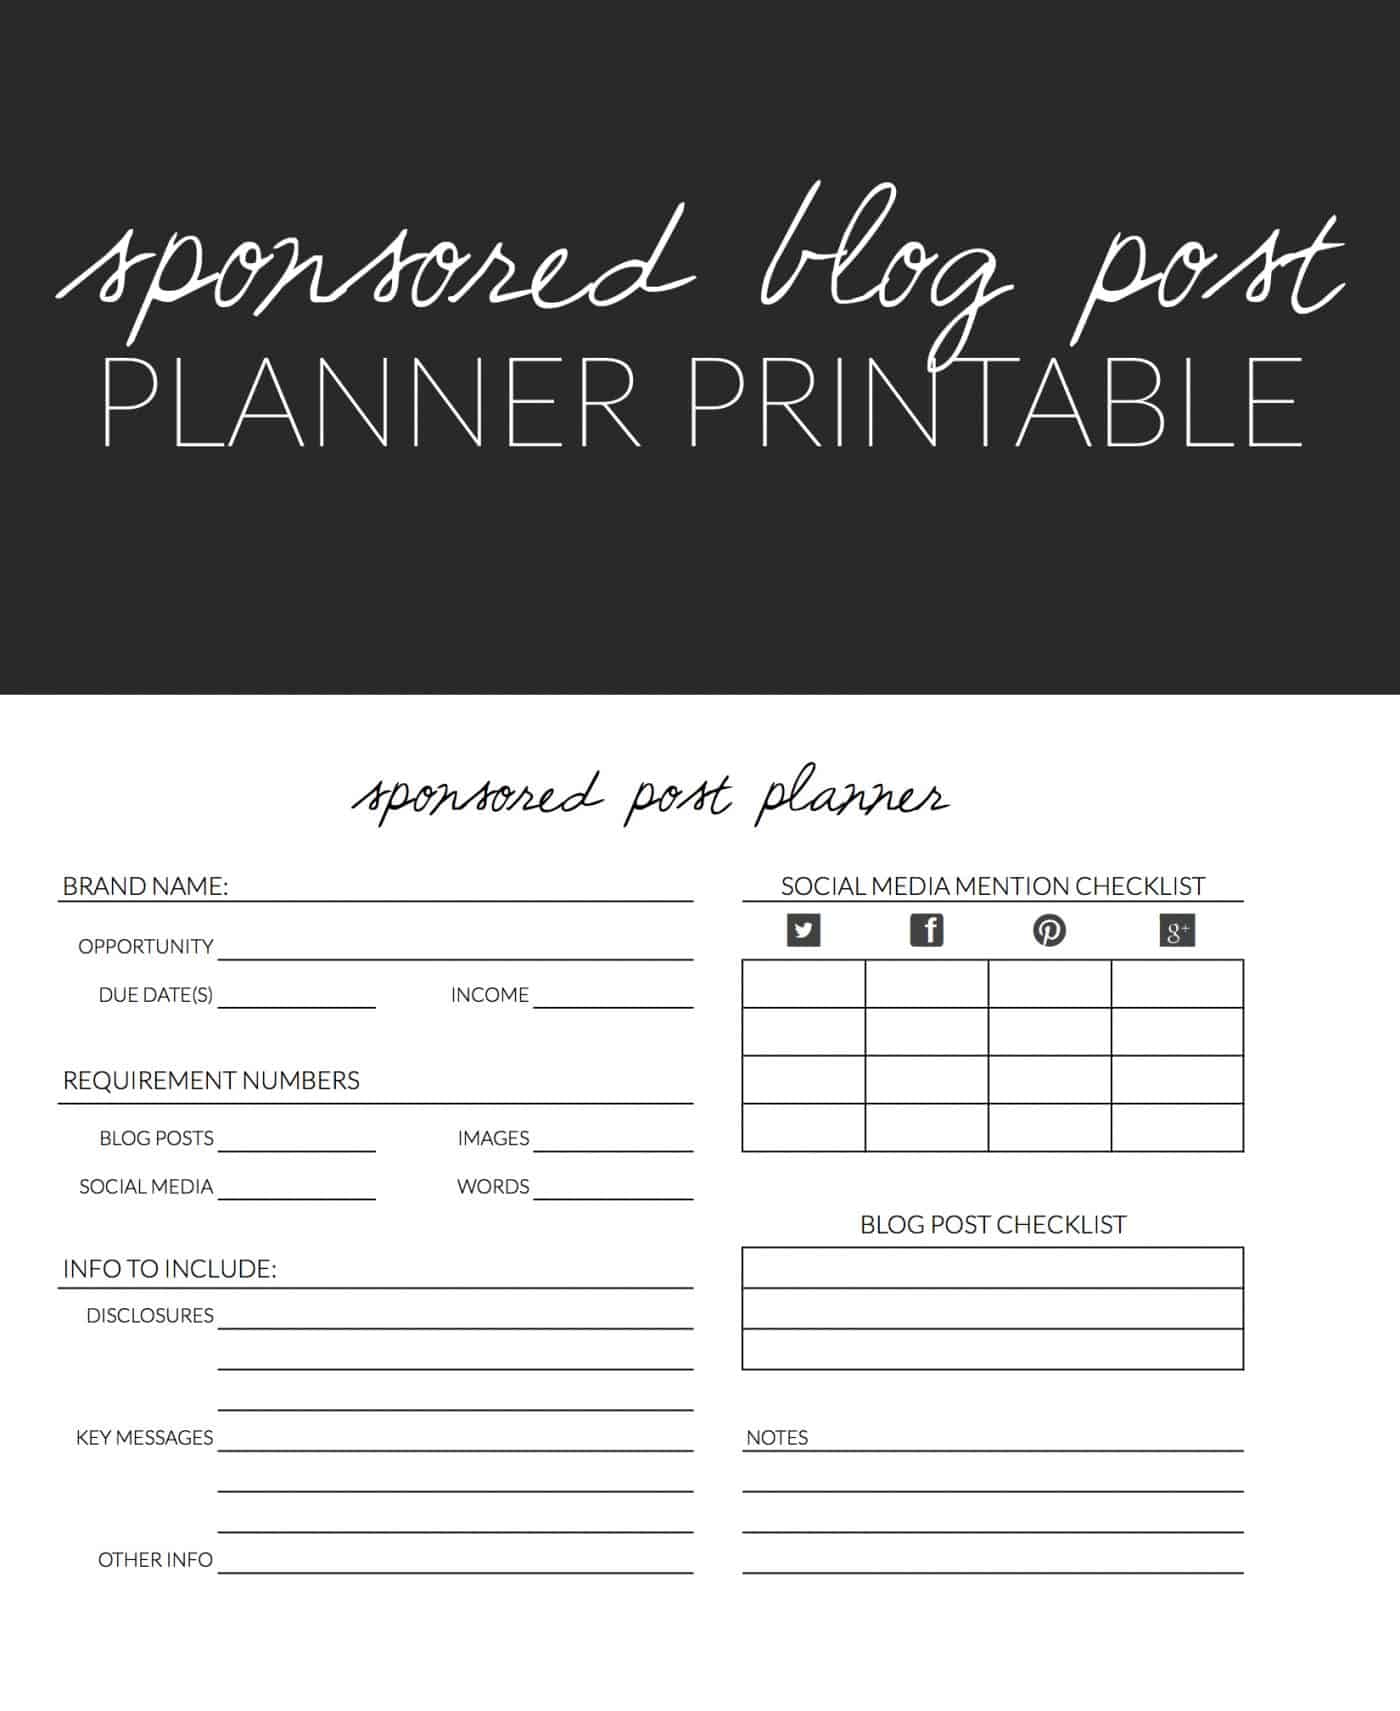 Free Sponsored Blog Post Planner Printable